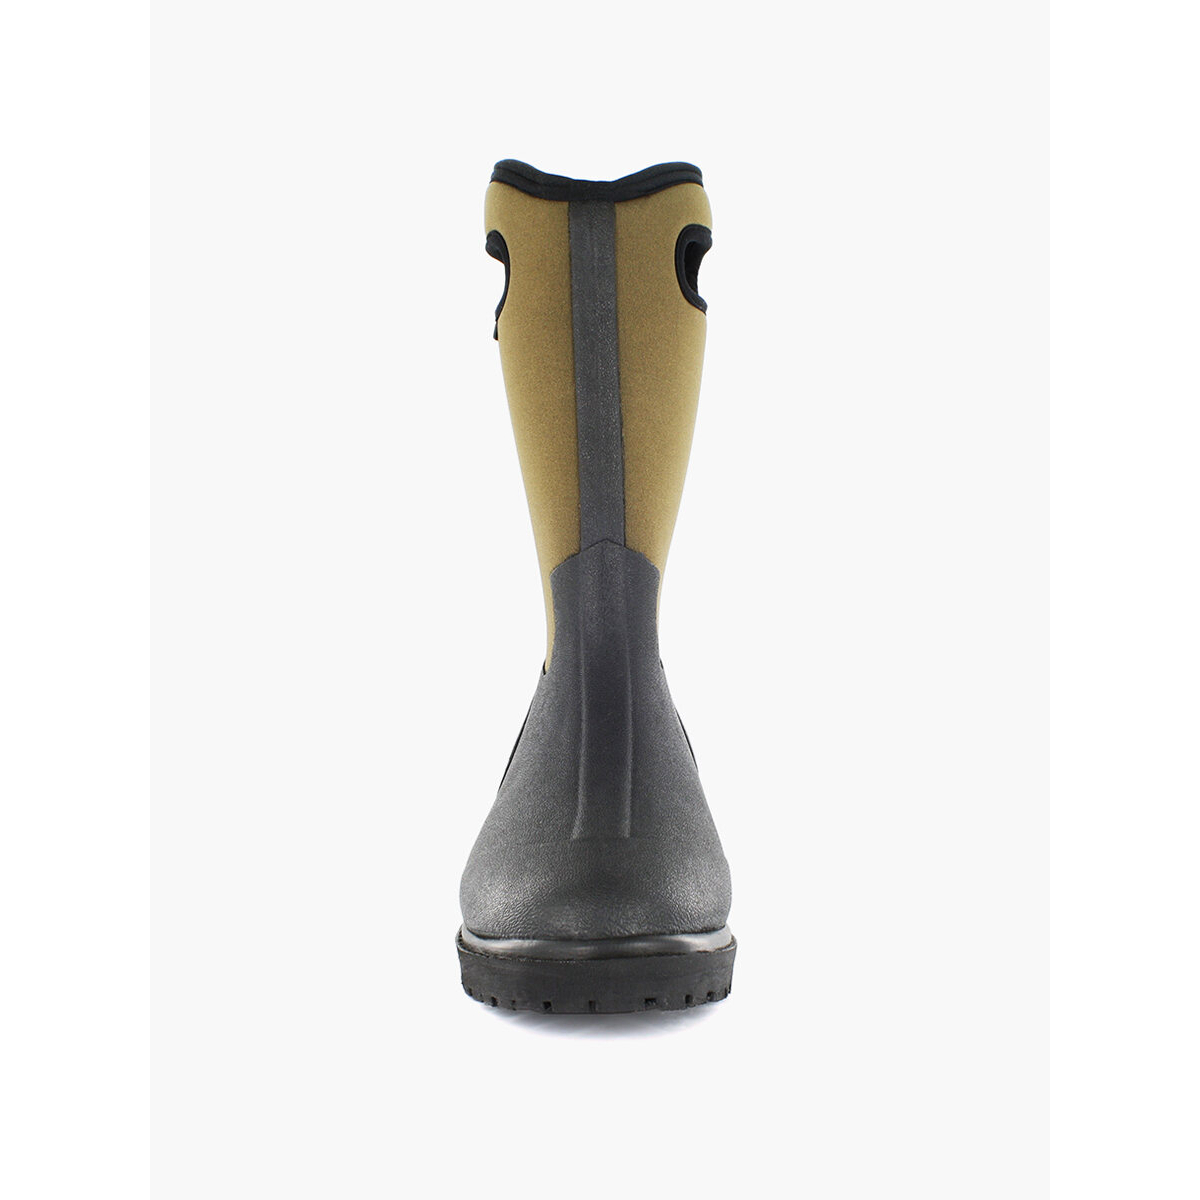 BOGS Men's Roper Insulated Waterproof Soft Toe Work Boots Black & Brown - 69162-963 - BLACK, 12